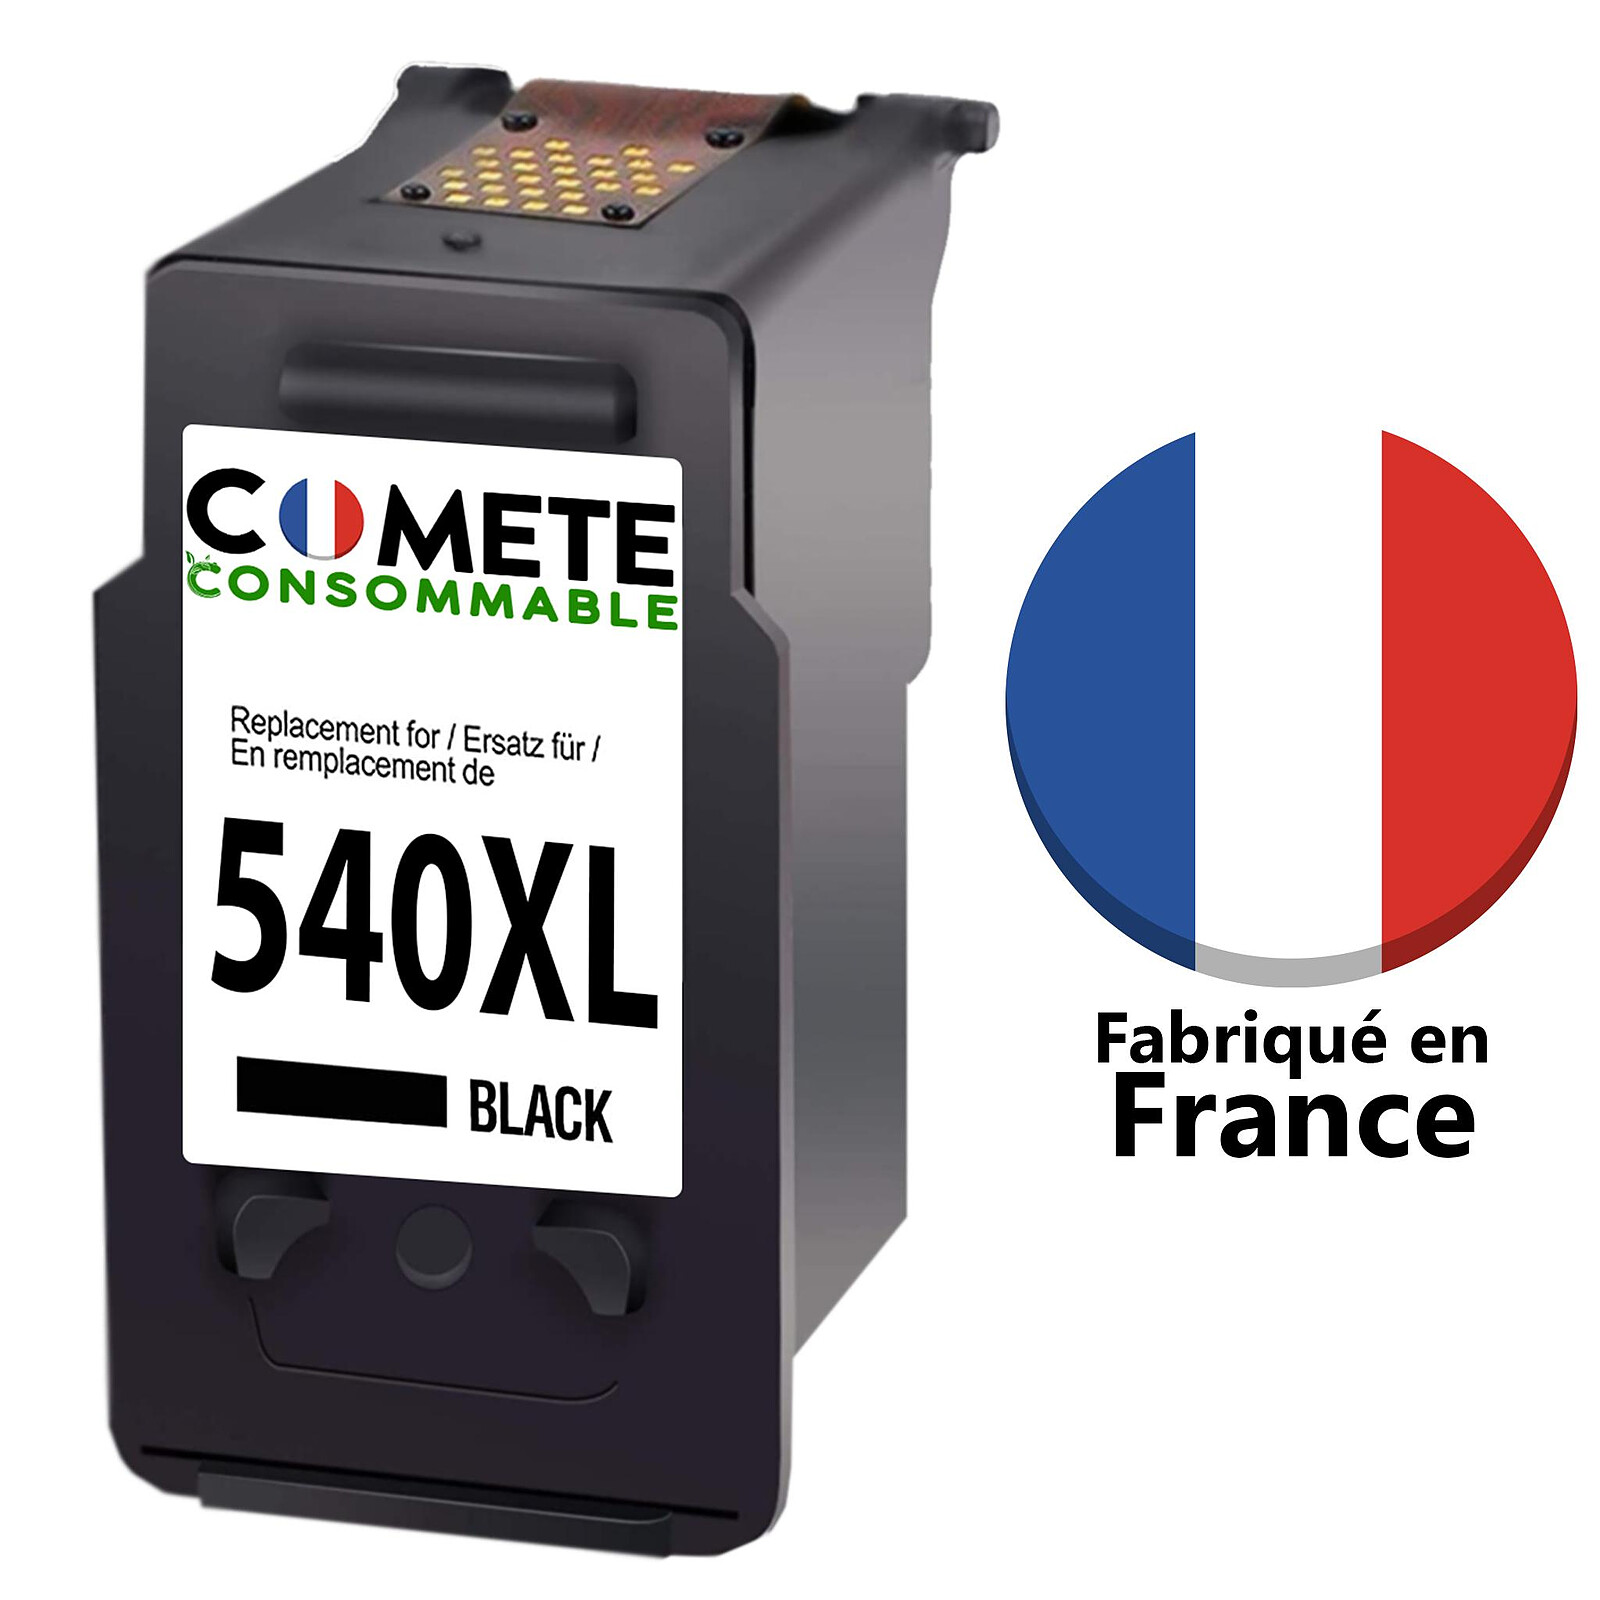 COMETE - 540XL - 1 cartouche MADE IN FRANCE compatible CANON 540XL - Noir -  Marque française - Cartouche imprimante - LDLC